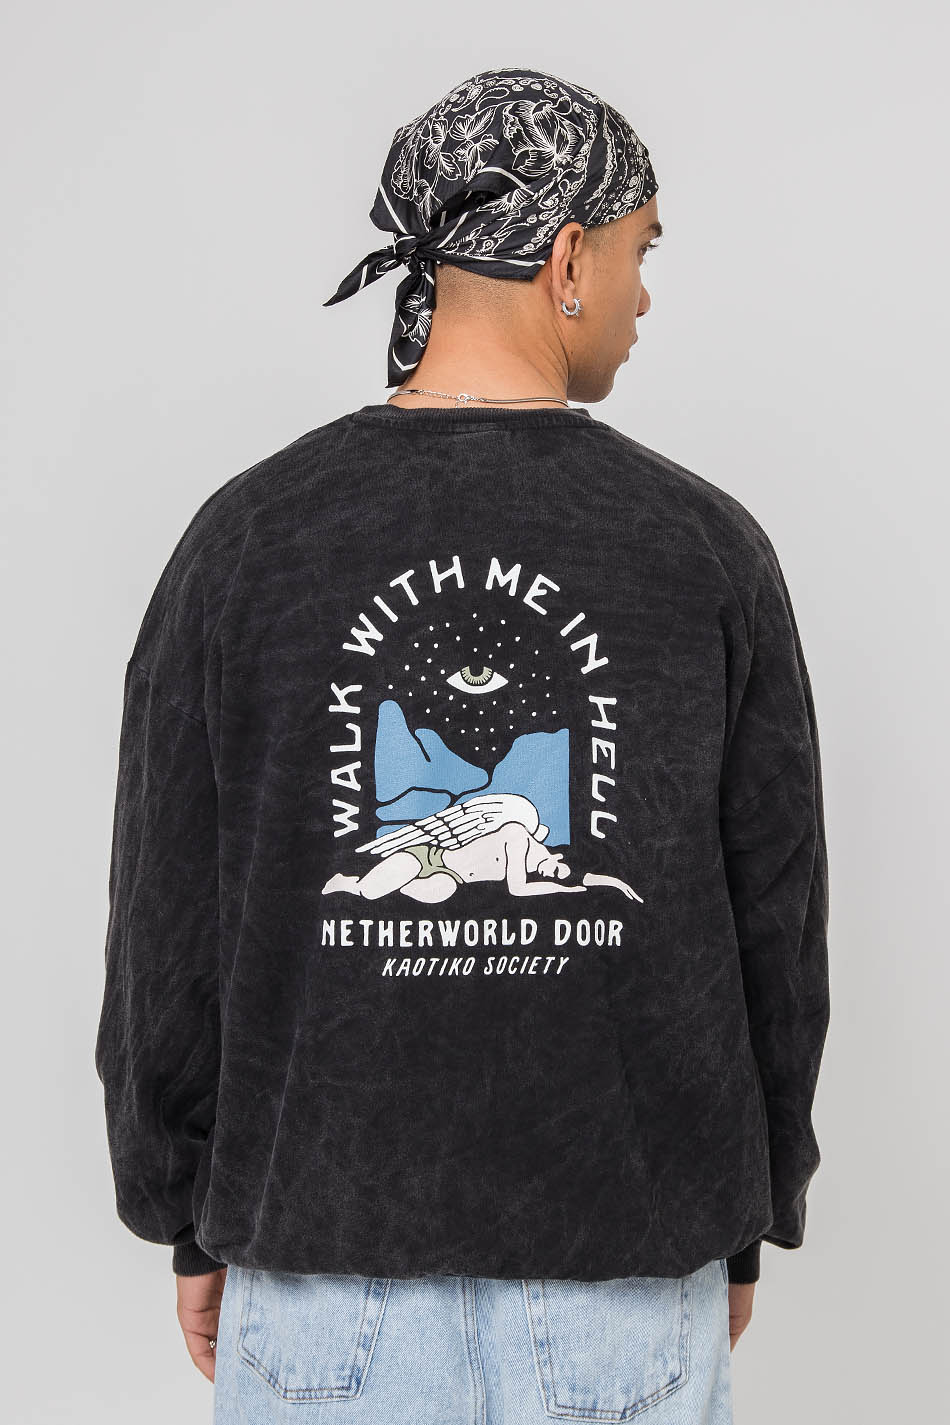 Netherworld Door Washed Sweatshirt